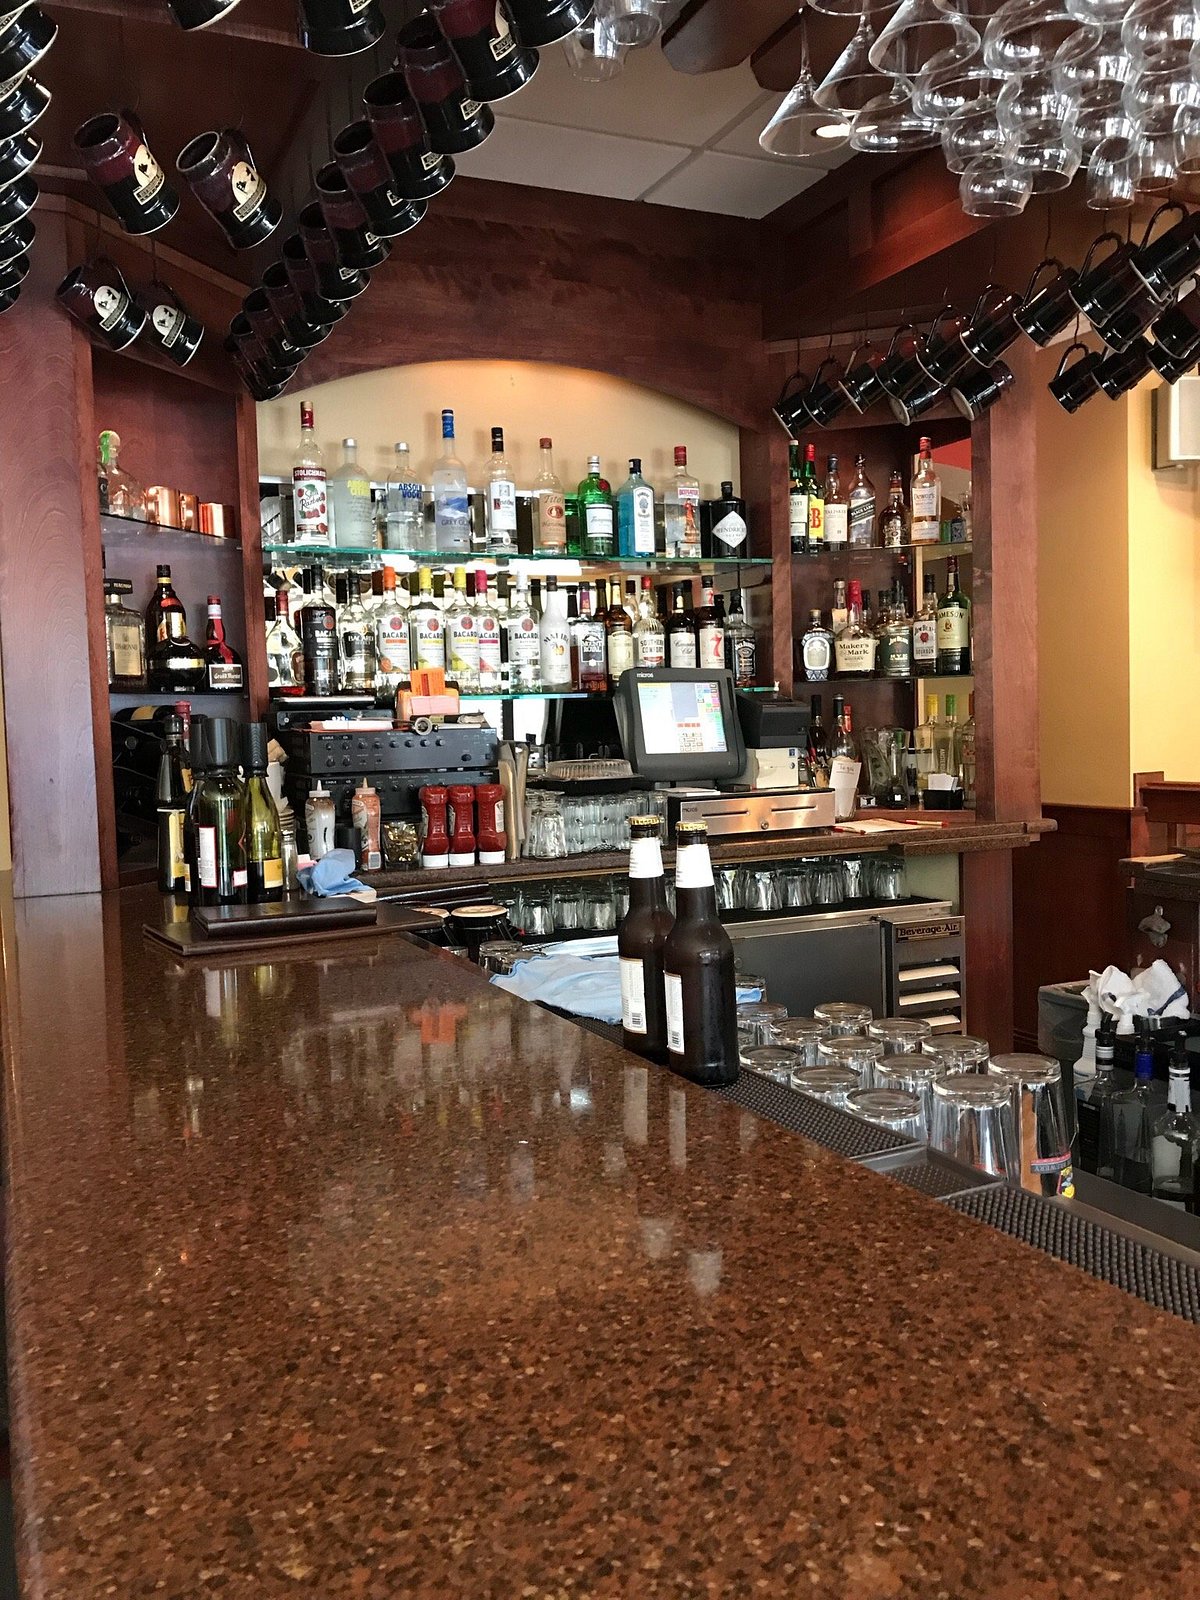 The Braising Pan Restaurant and Bar